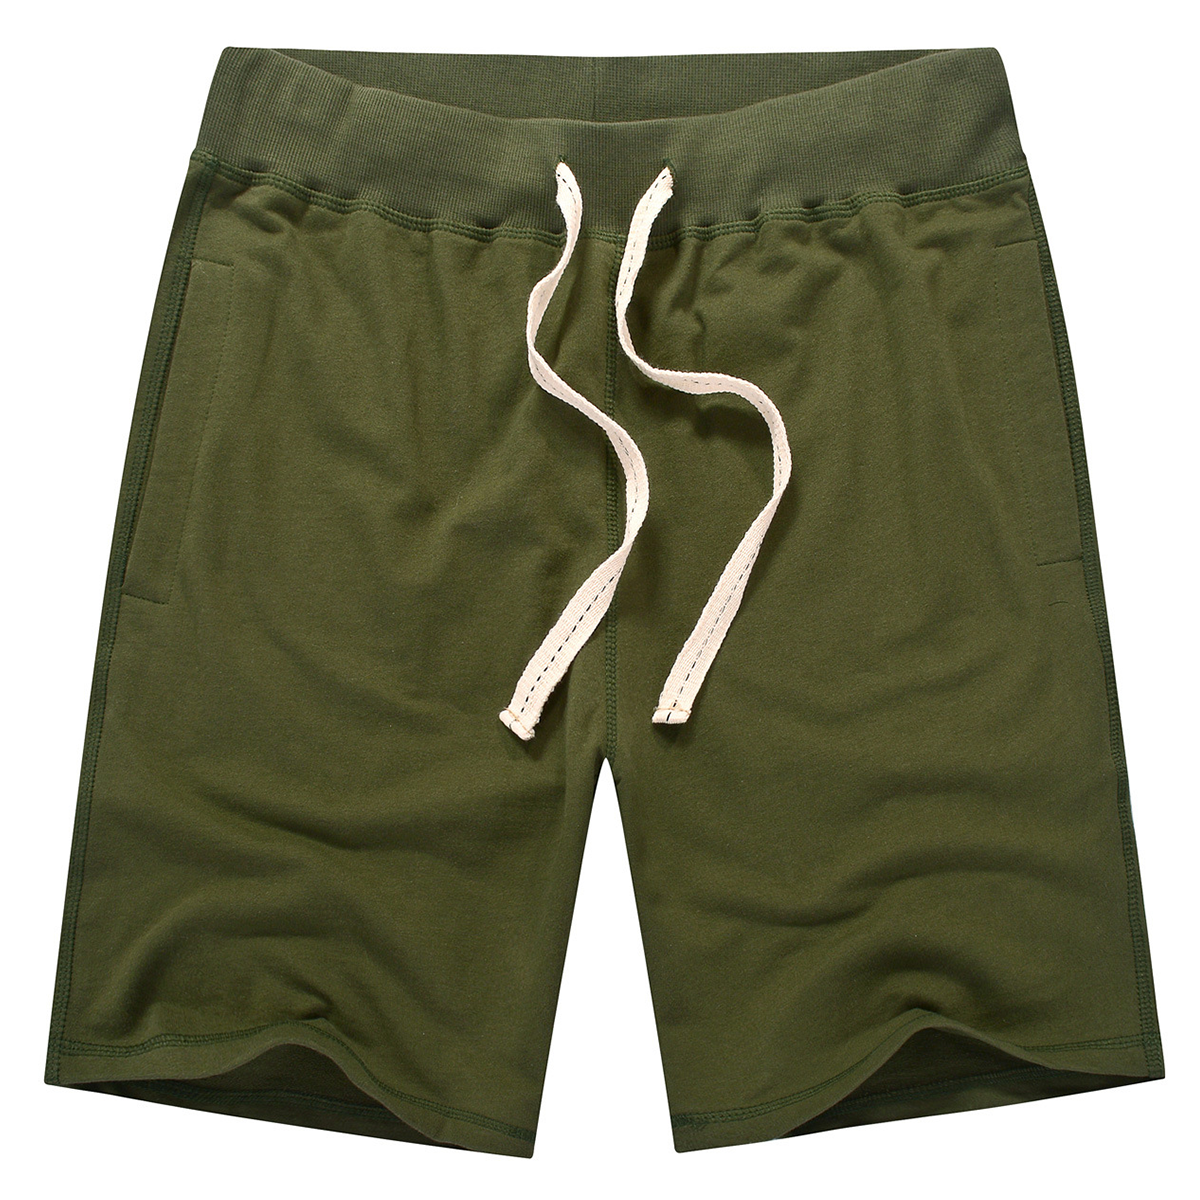 Pantalón deportivo casual de algodón de color sólido para hombre, pantalón corto de verano para playa